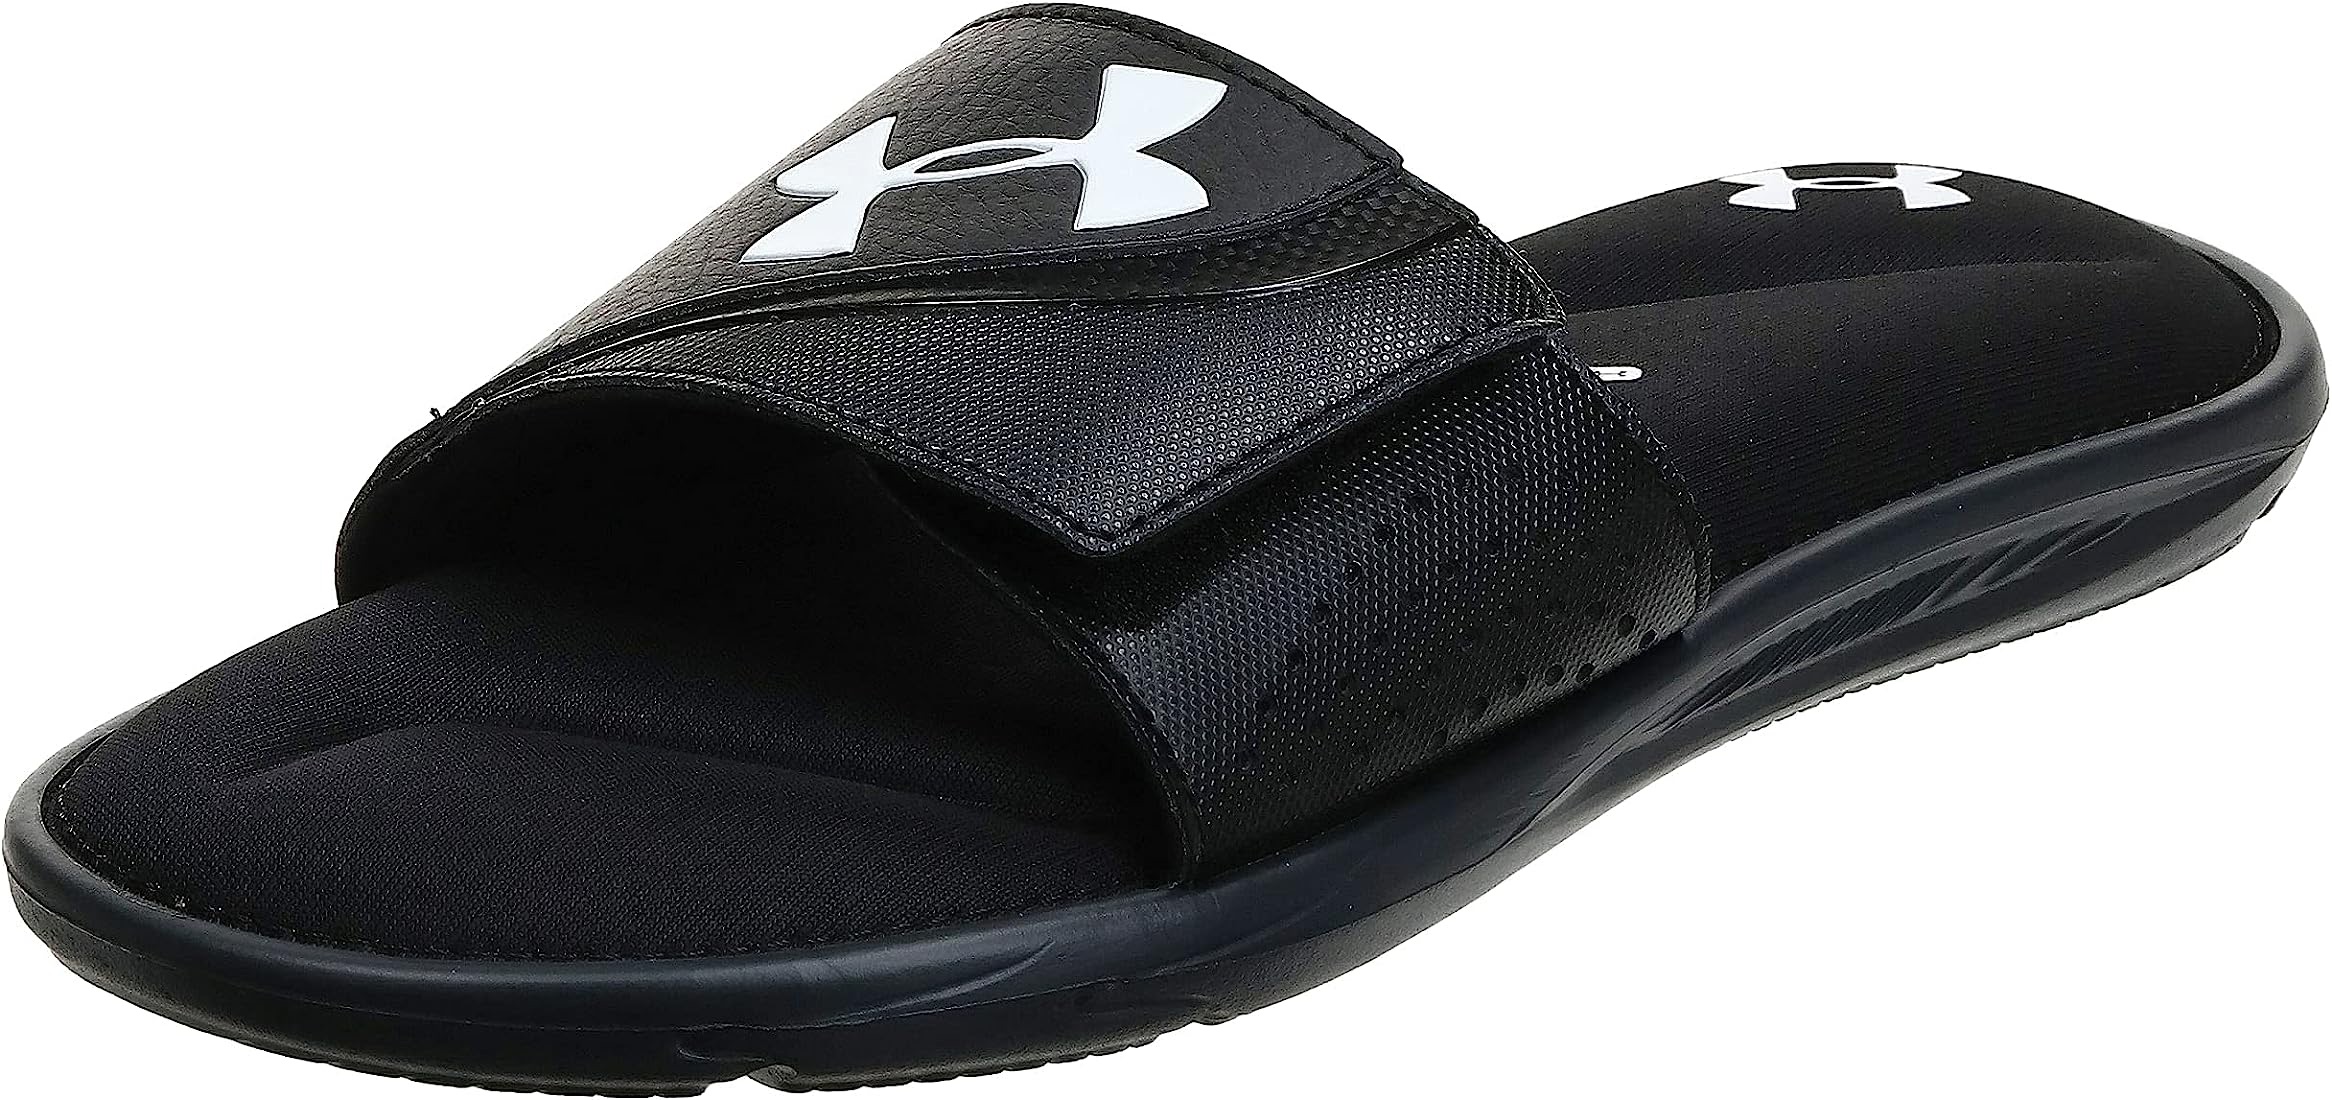 Amazon.com | Under Armour Men's Ignite VI Slide Sandal, Black (003)/Black, 8 | Sport Sandals & Slides